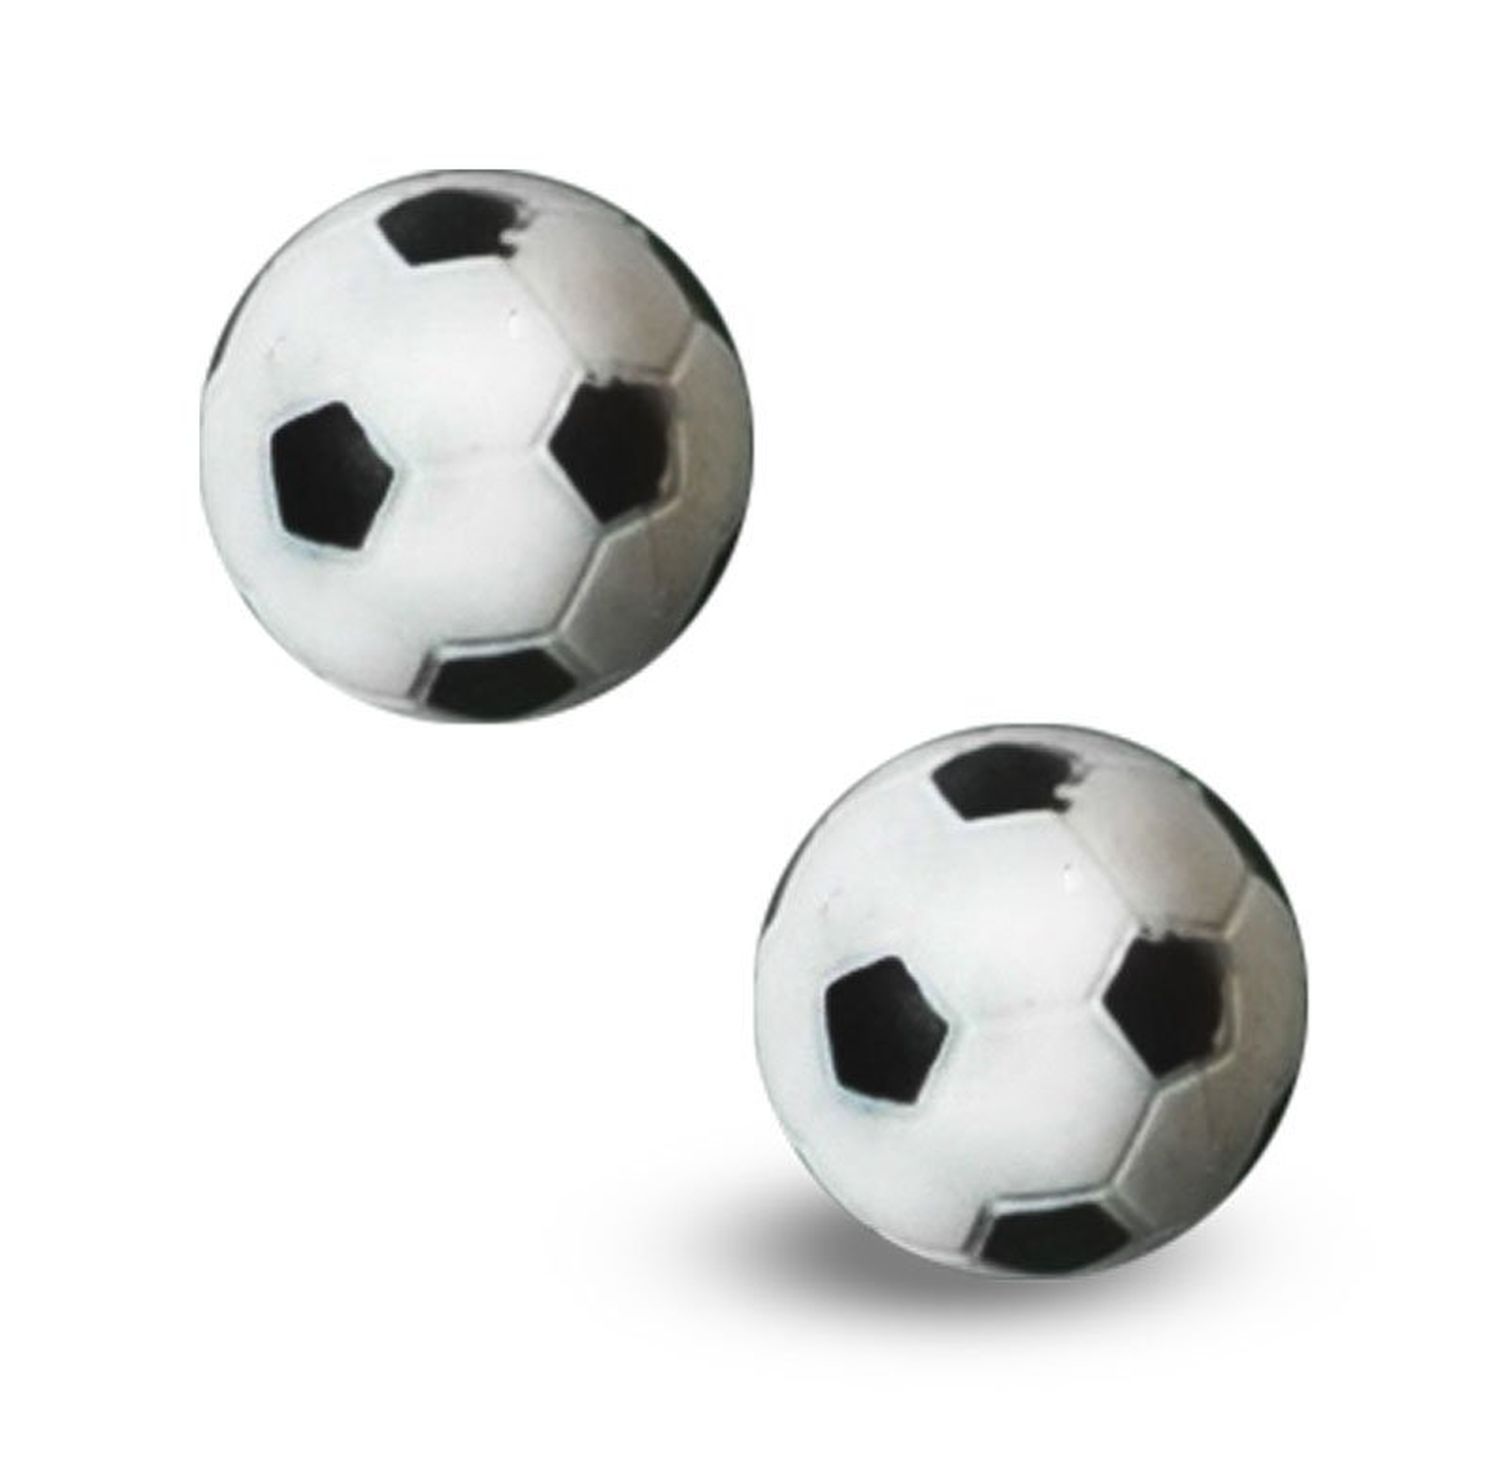 Protocol Tabletop Foosball (Soccer) Game - image 3 of 3